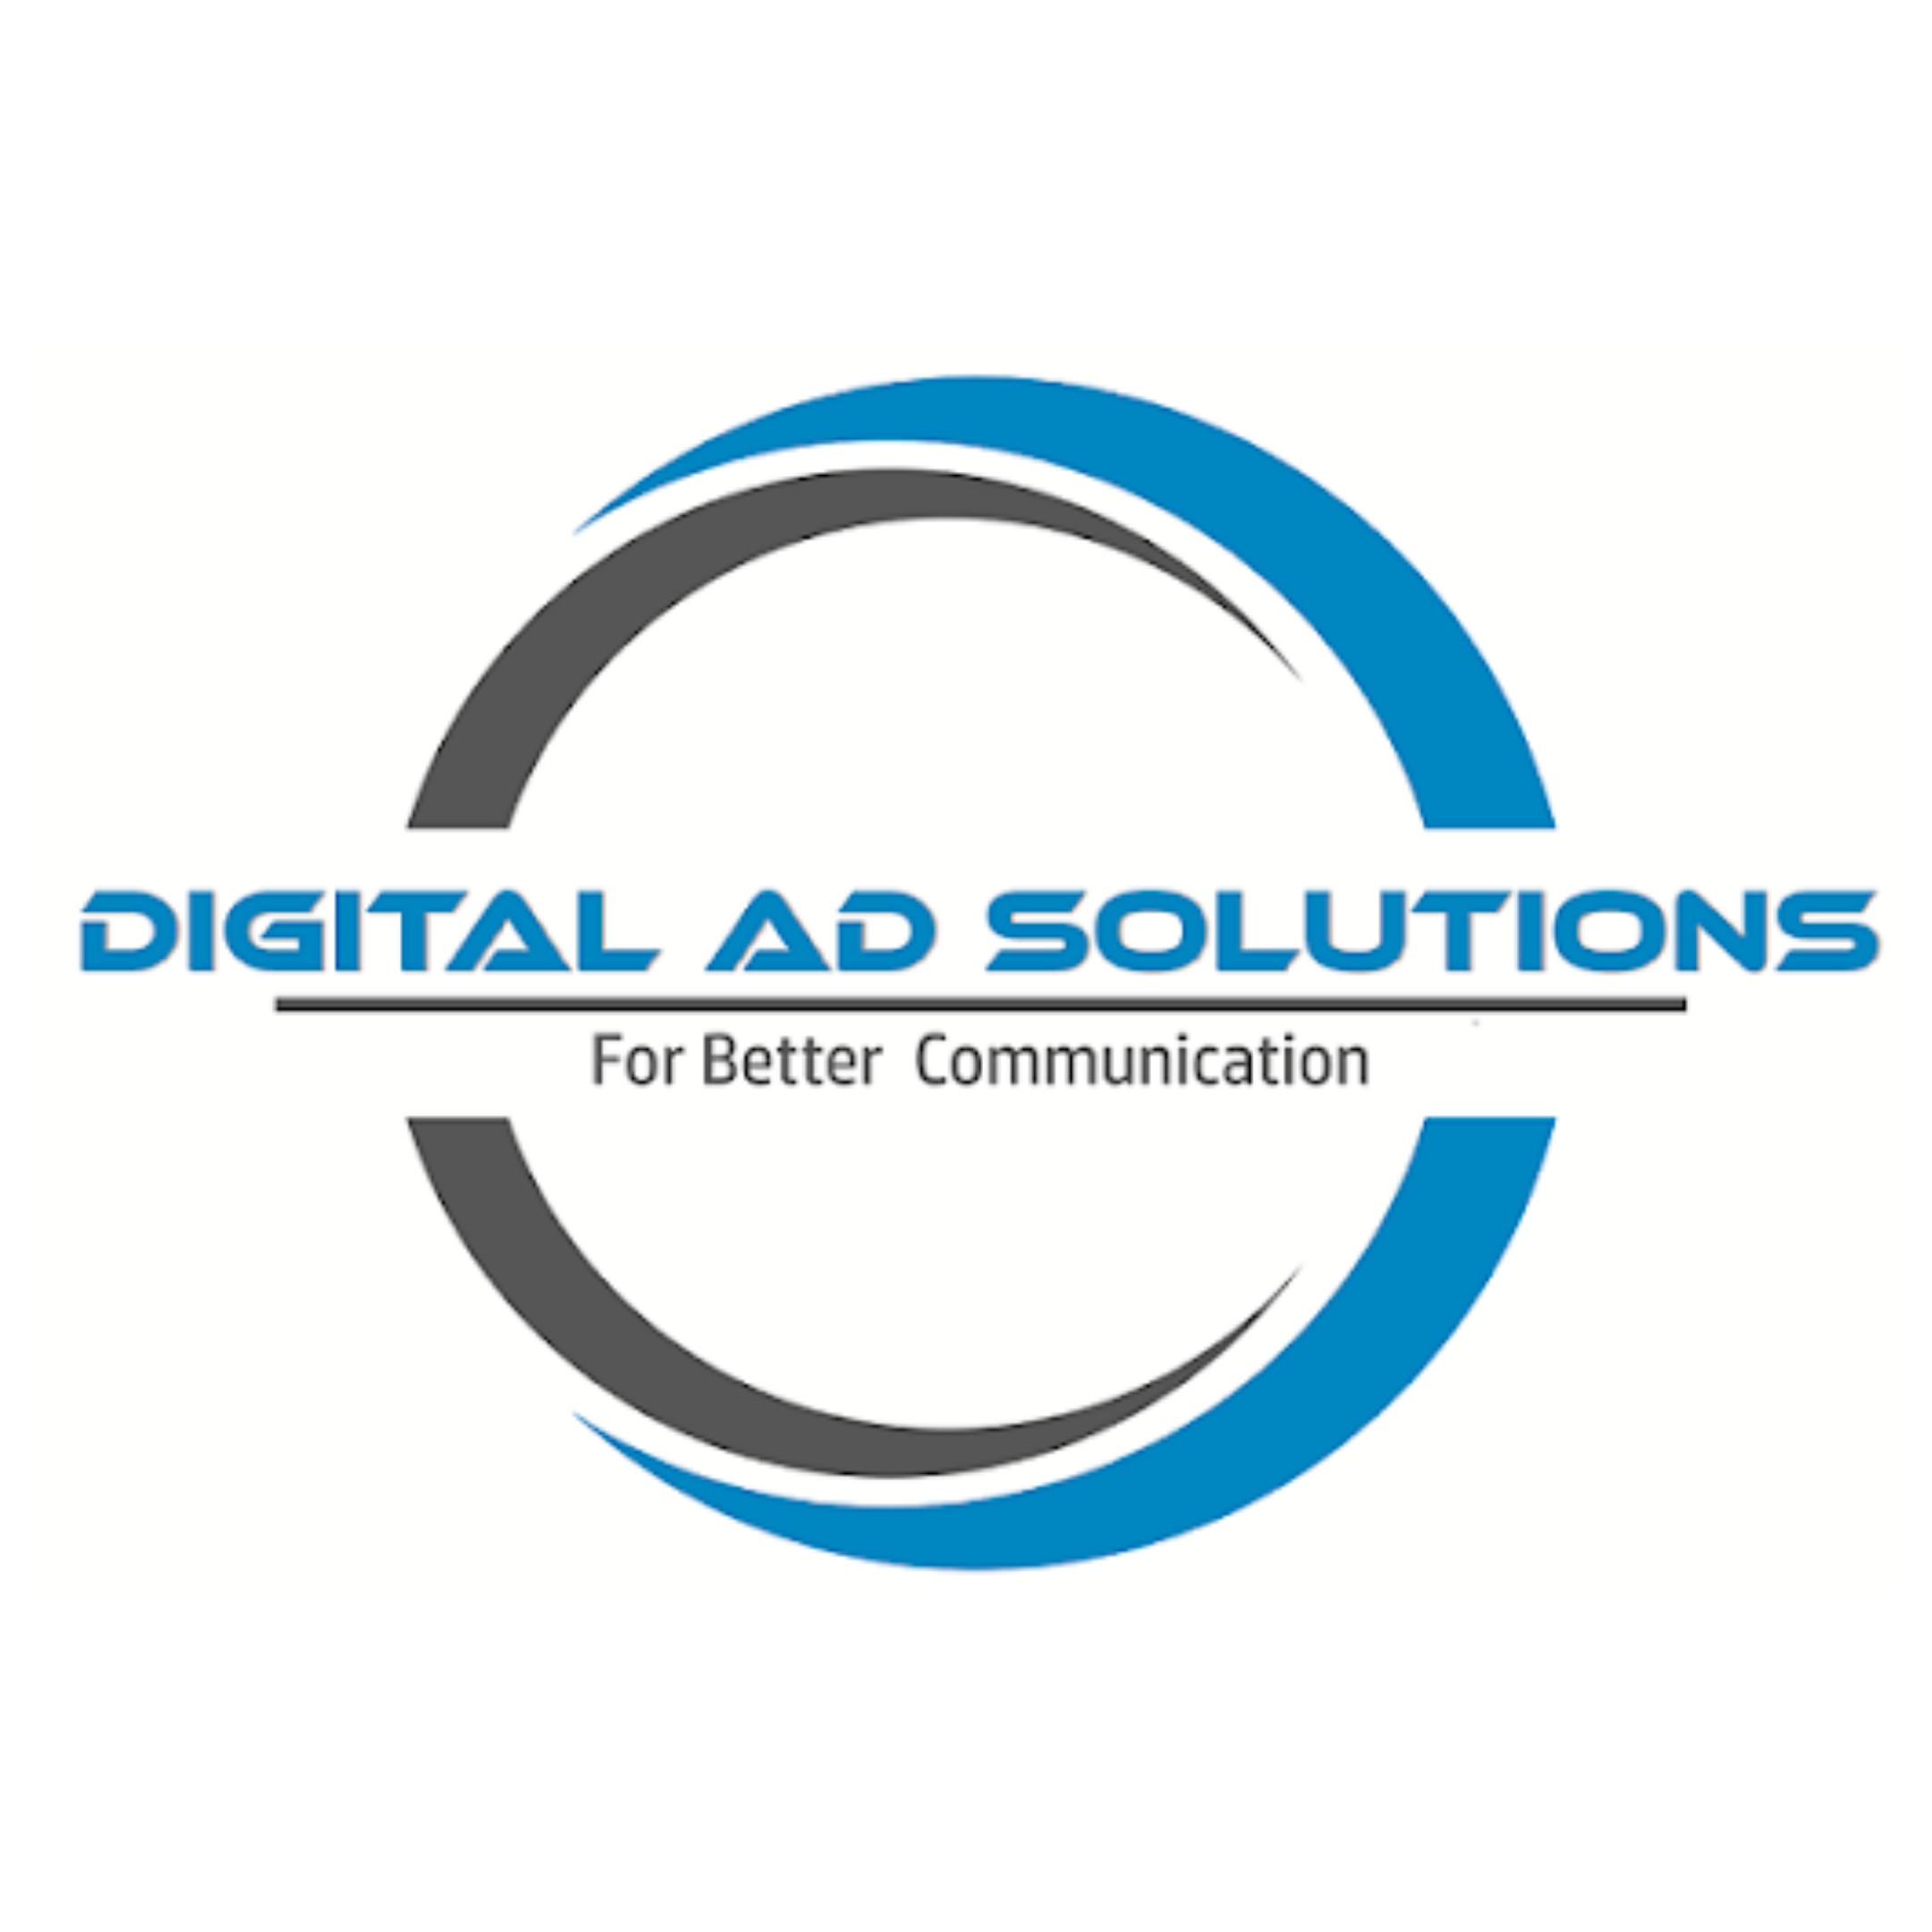 Digital AD Solutions